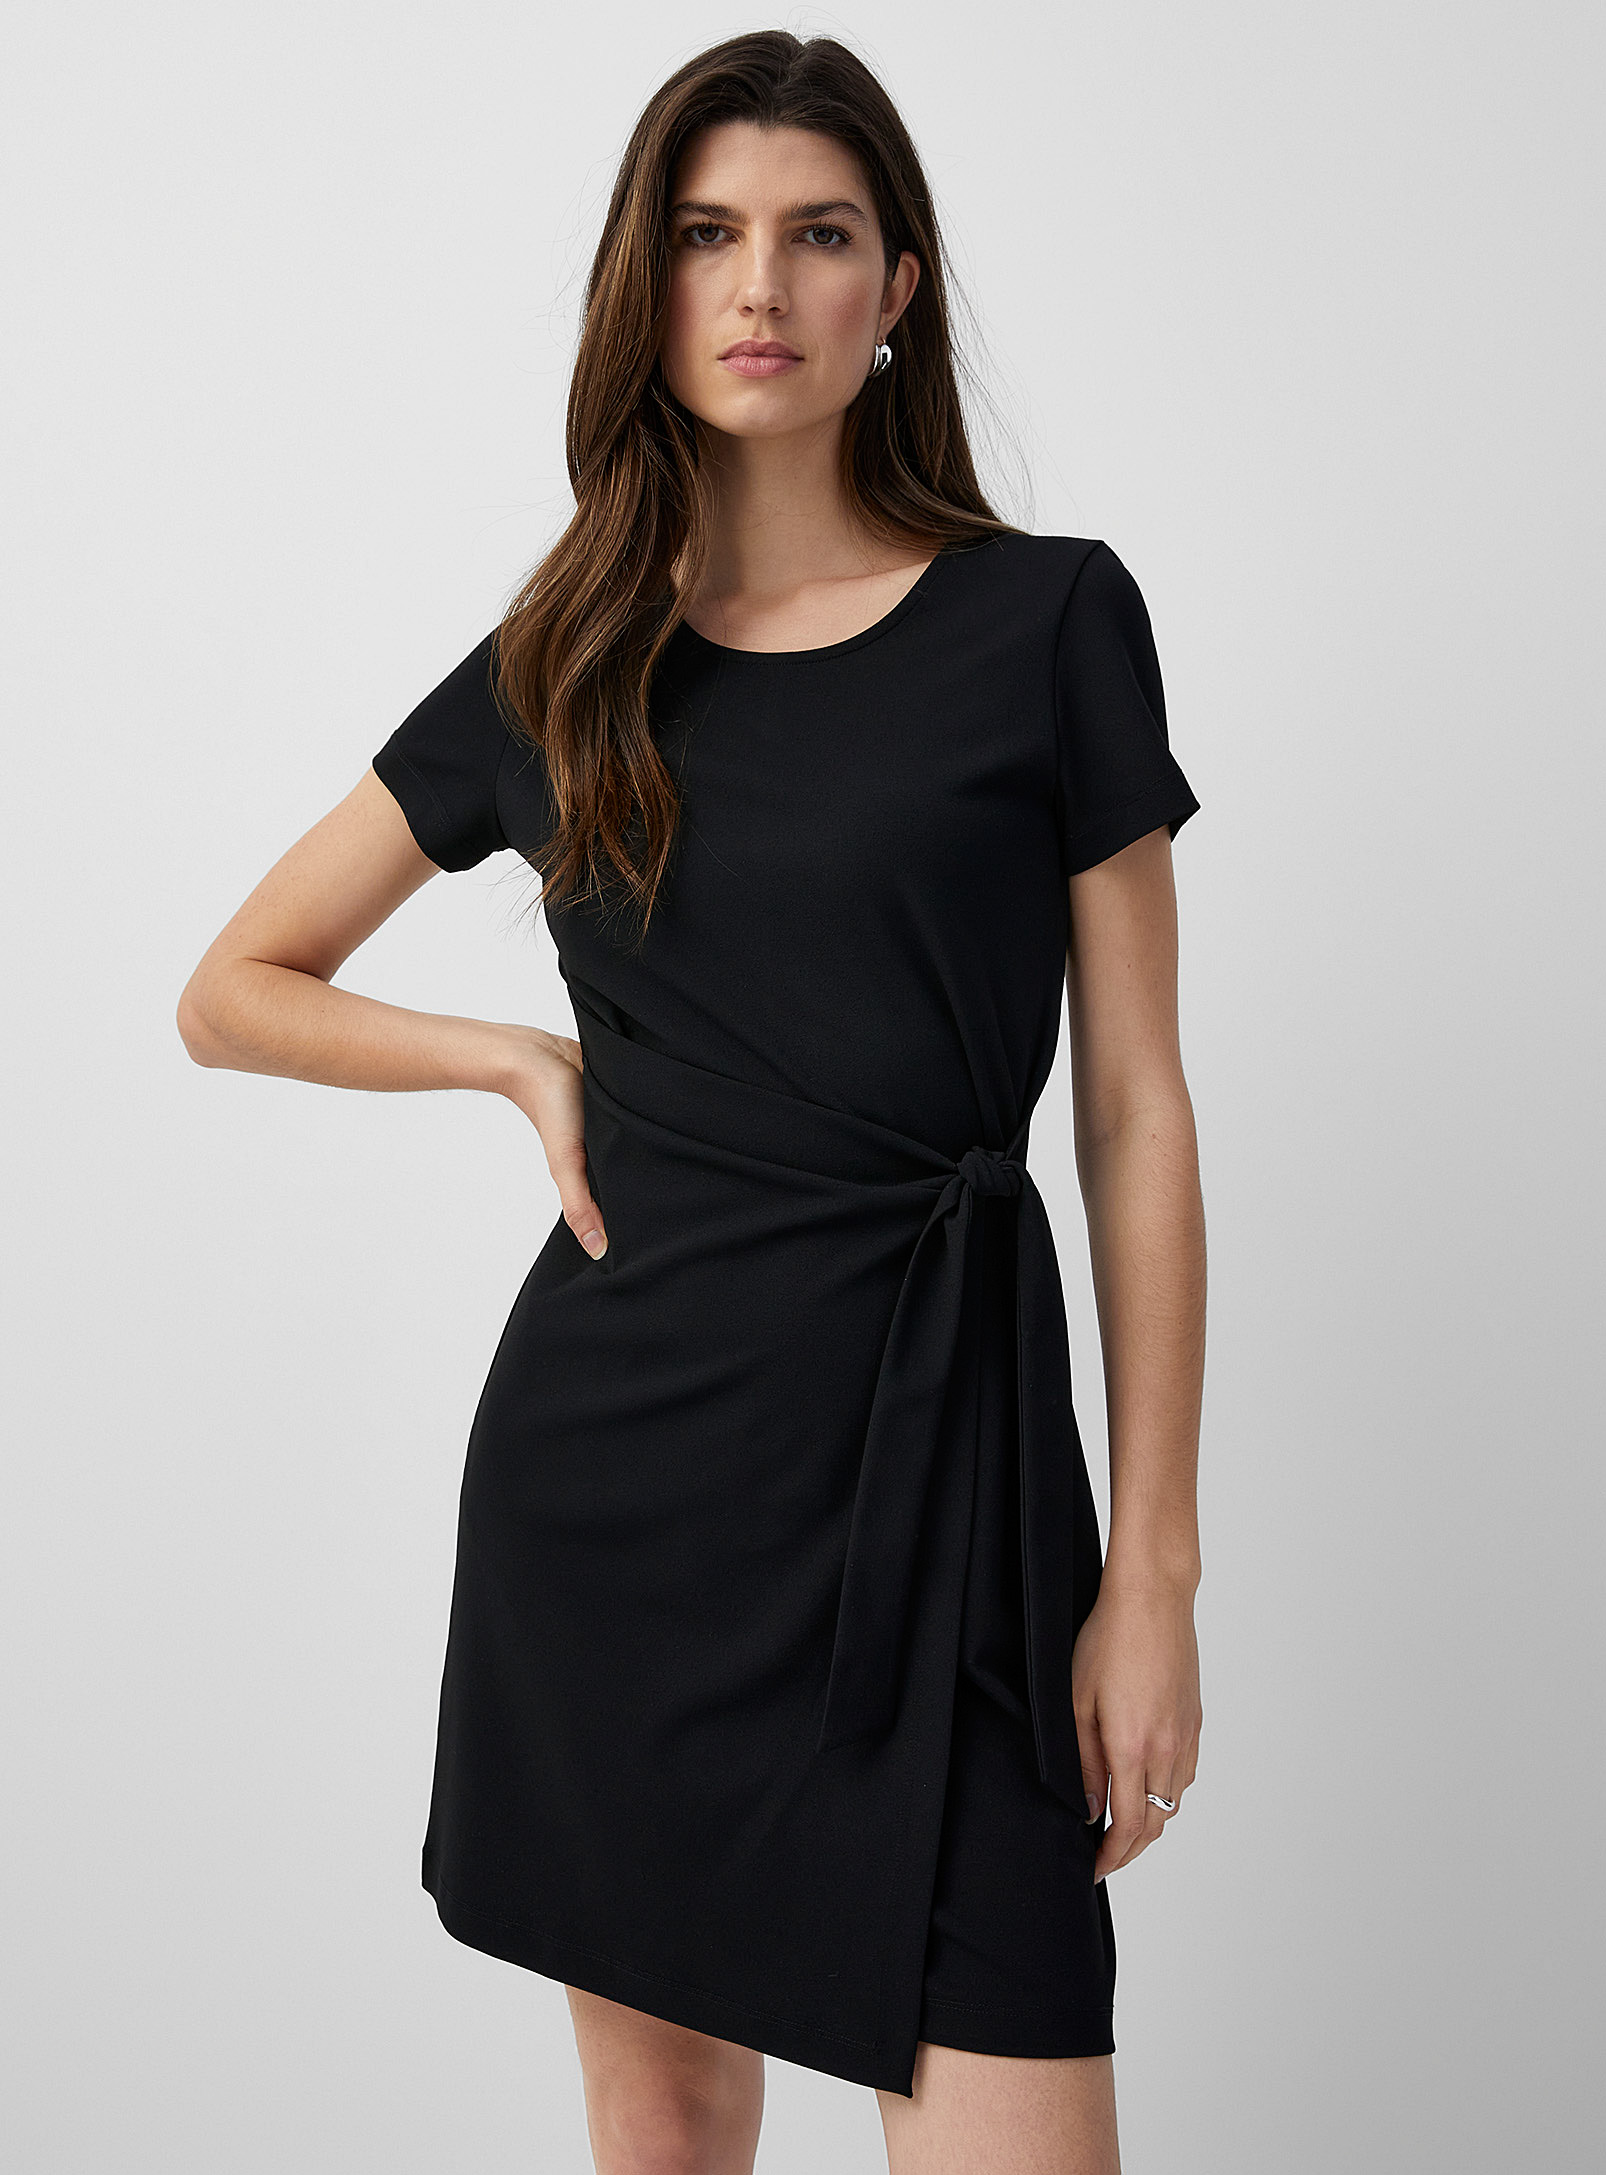 Contemporaine Wraparound Panel Dress In Black